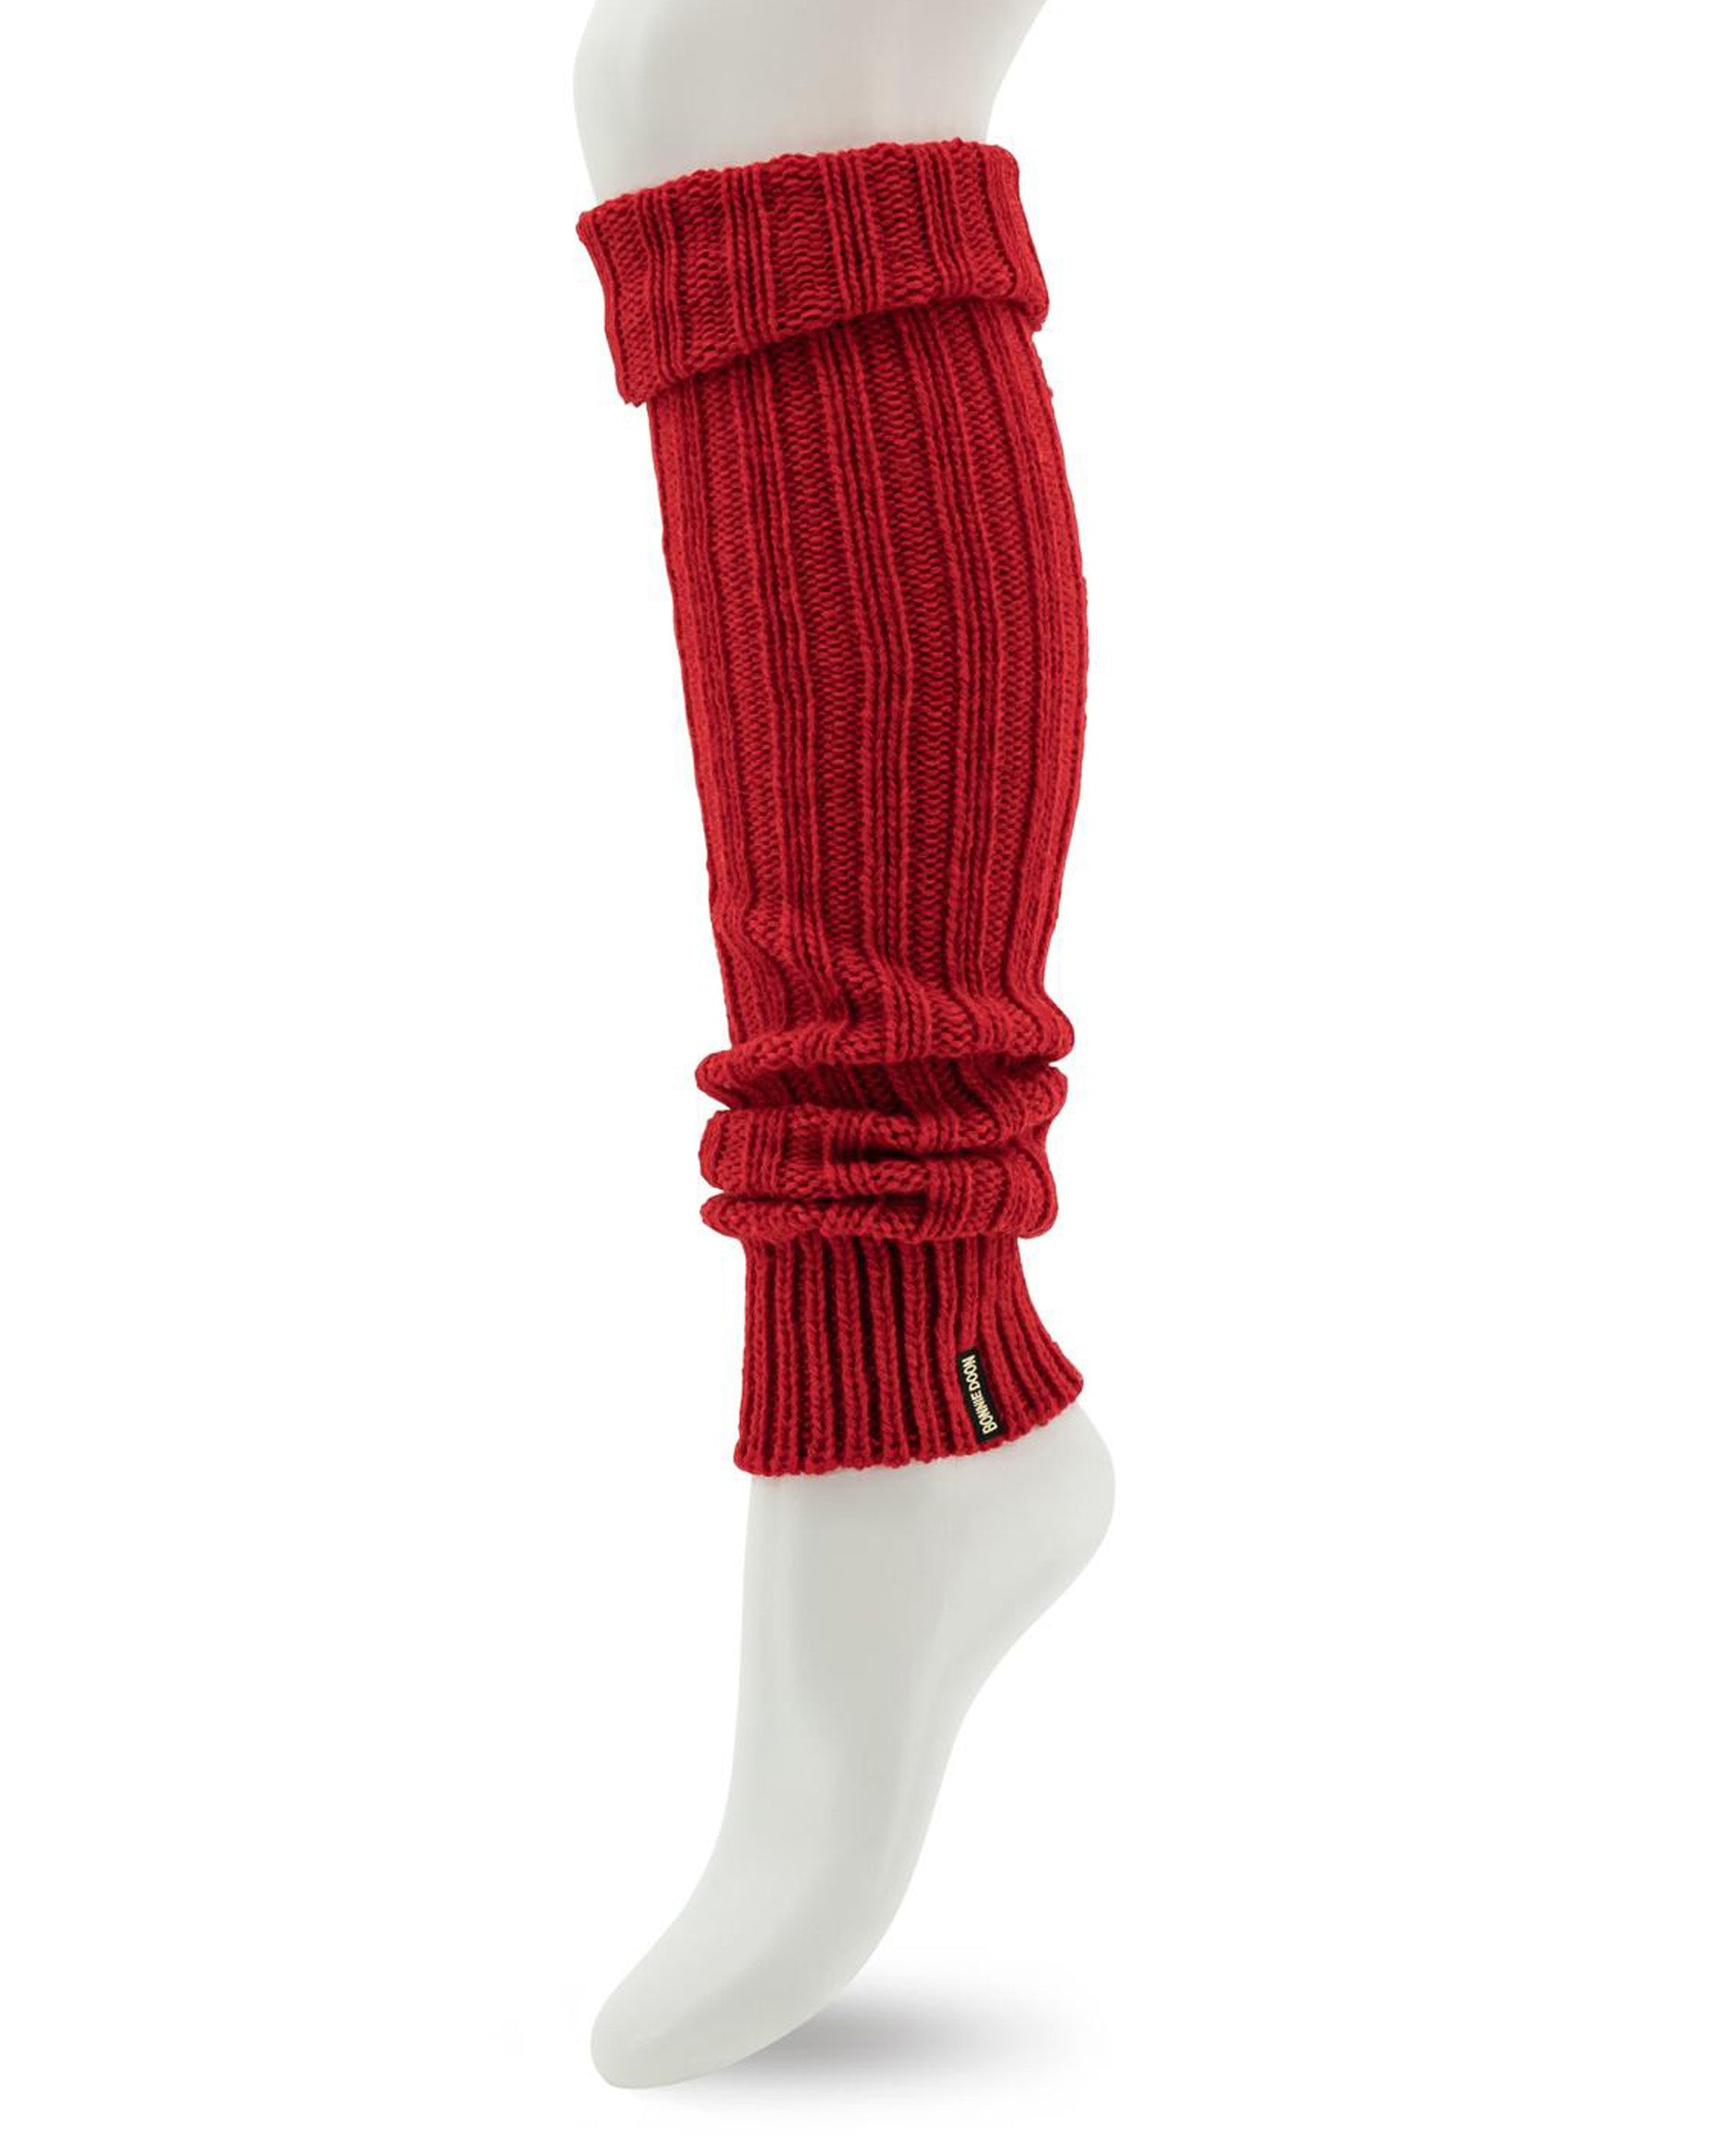 chunking warm wool mix rib knit leg warmers in a bright red colour